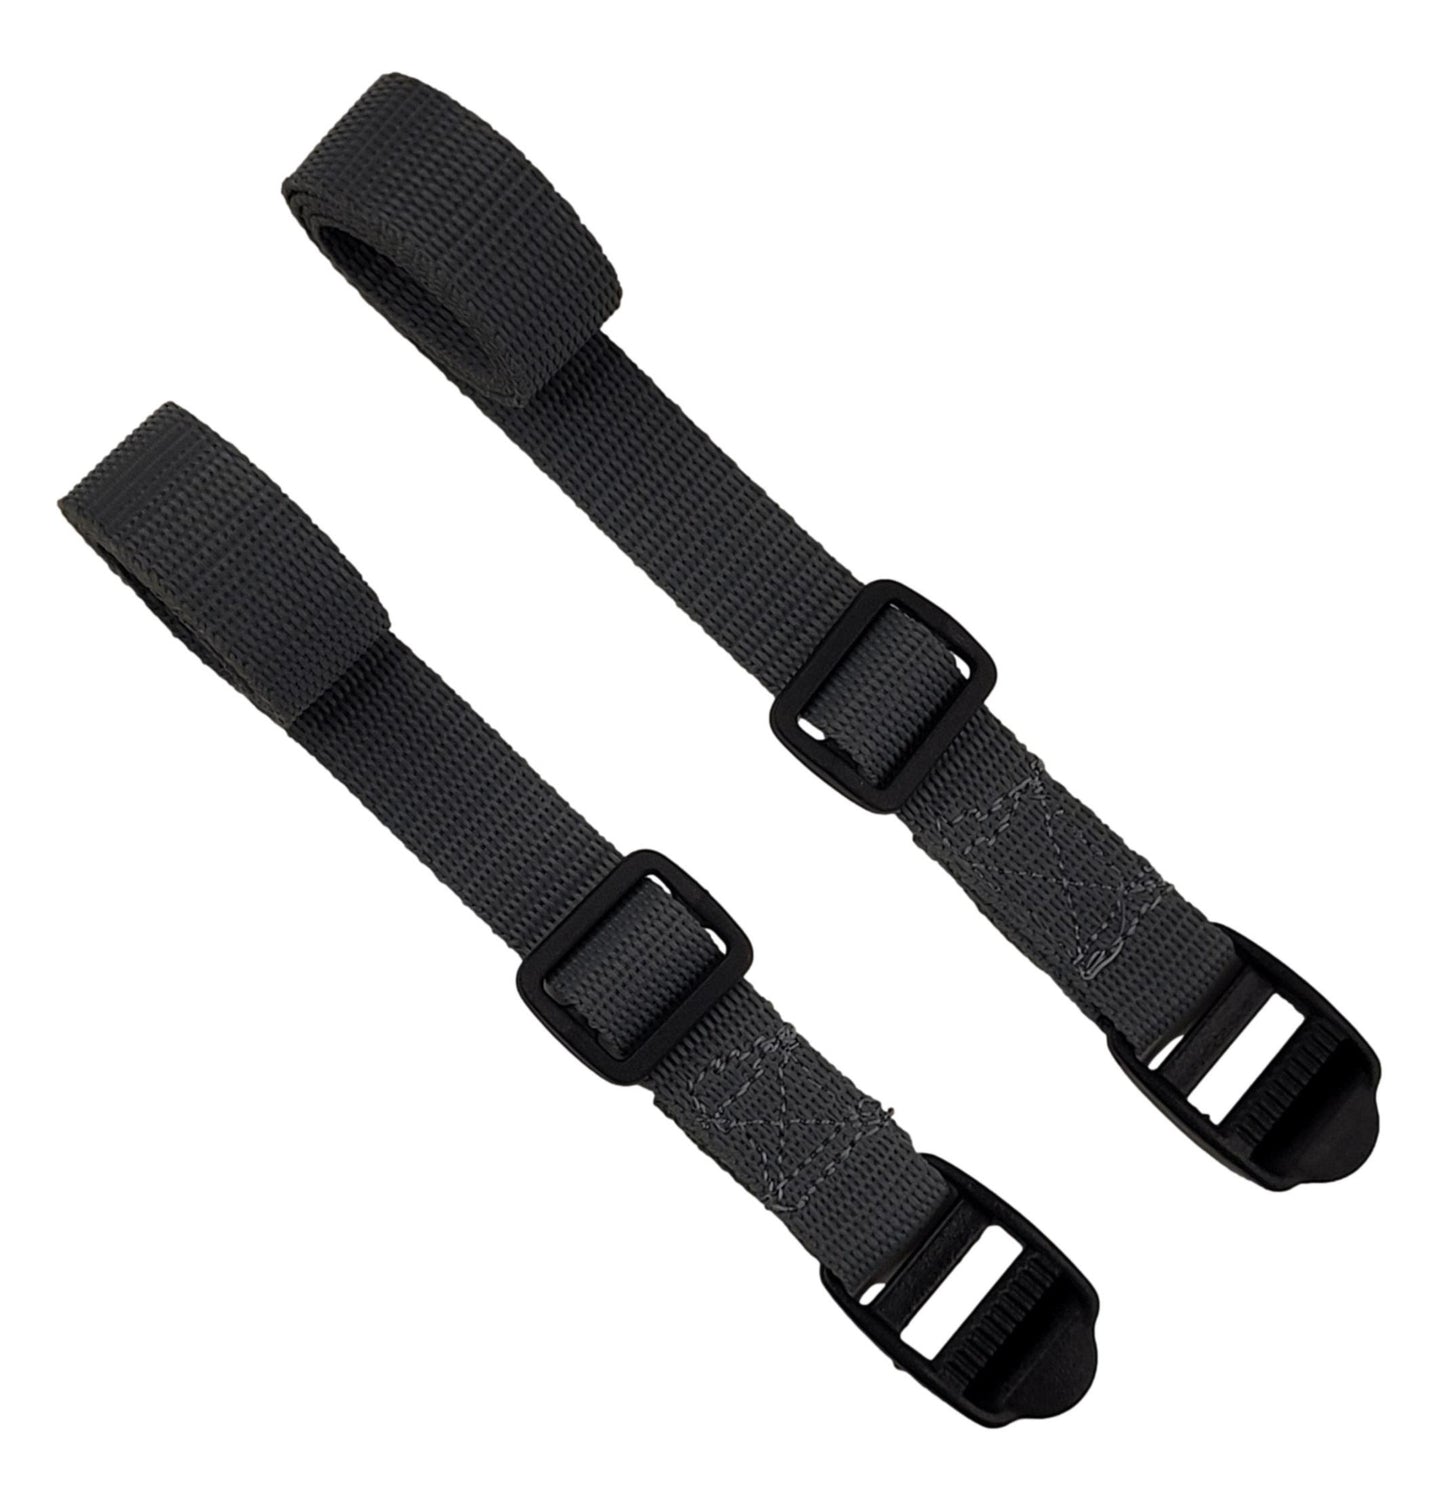 19mm webbing strap in grey with ladderlock buckle (pair) (2)